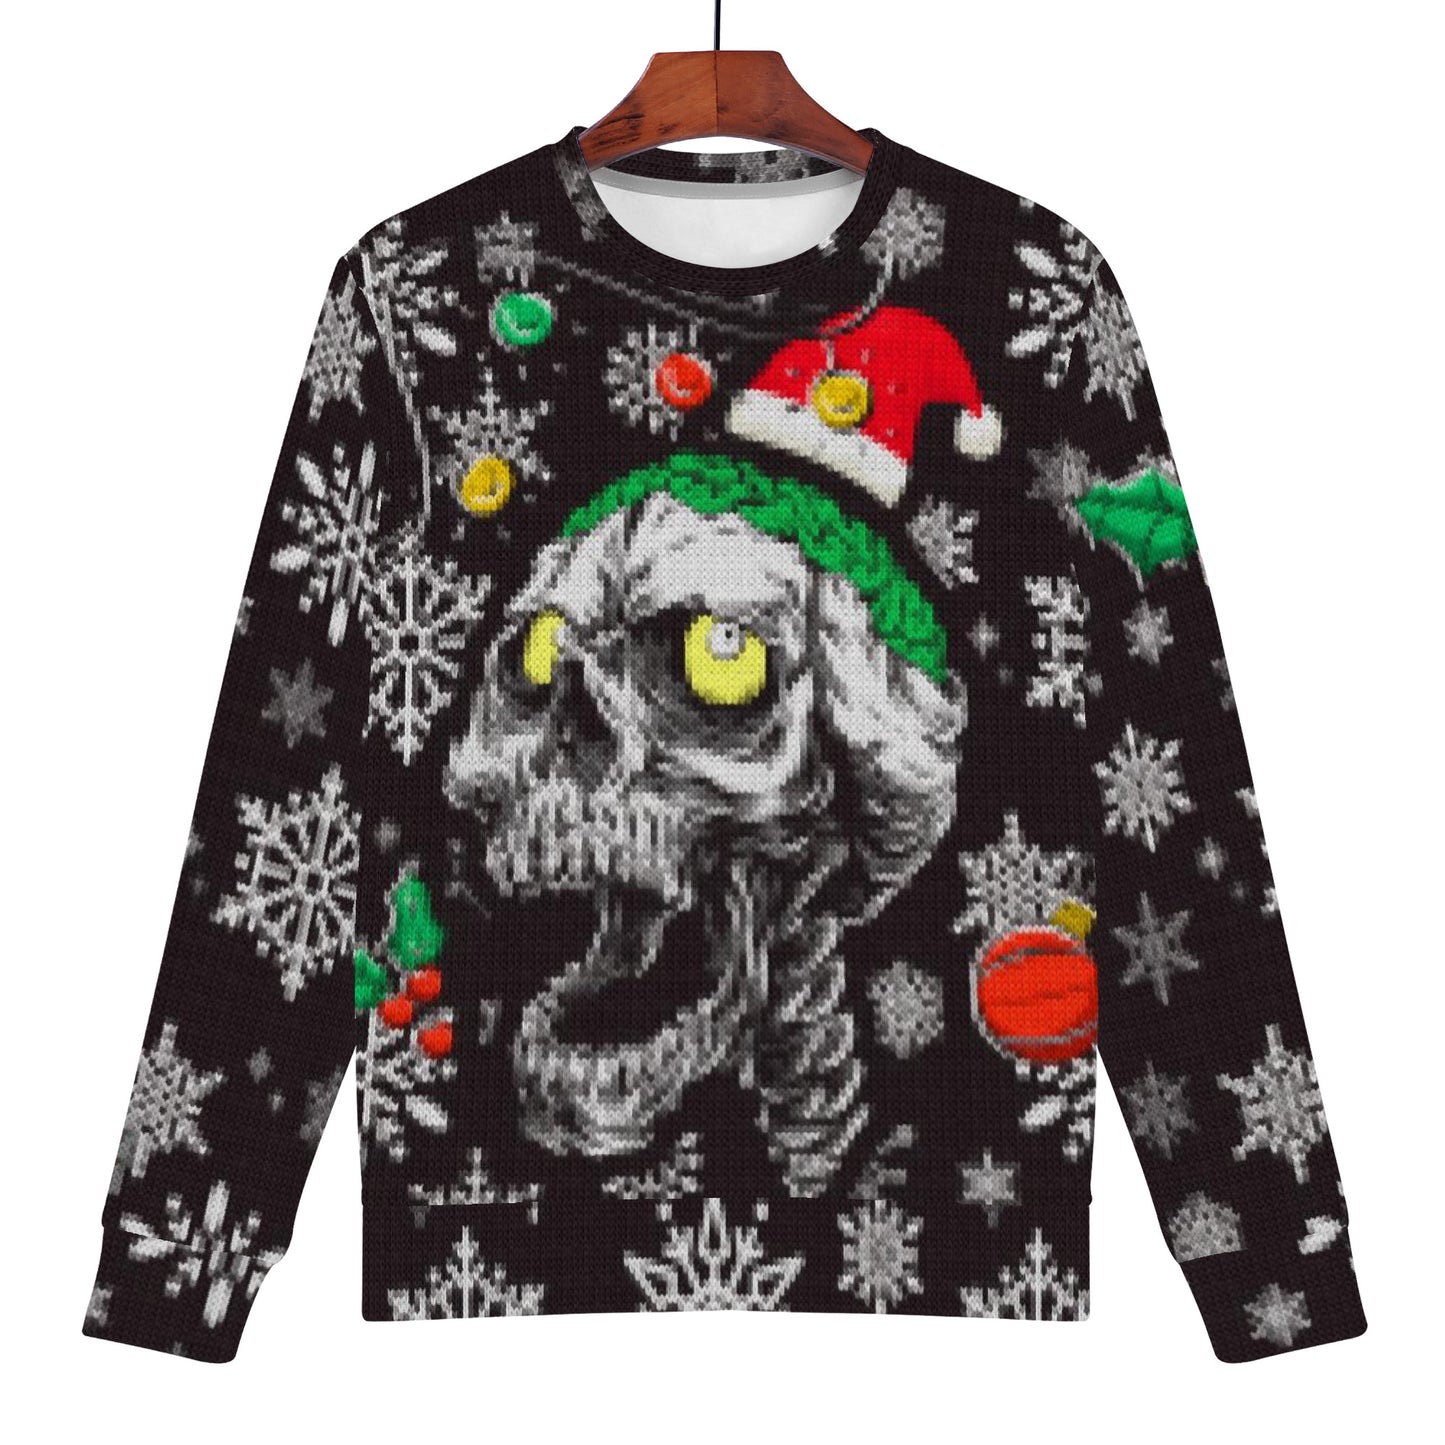 Merry Skulls Ugly Sweater Style Women's Sweatshirt